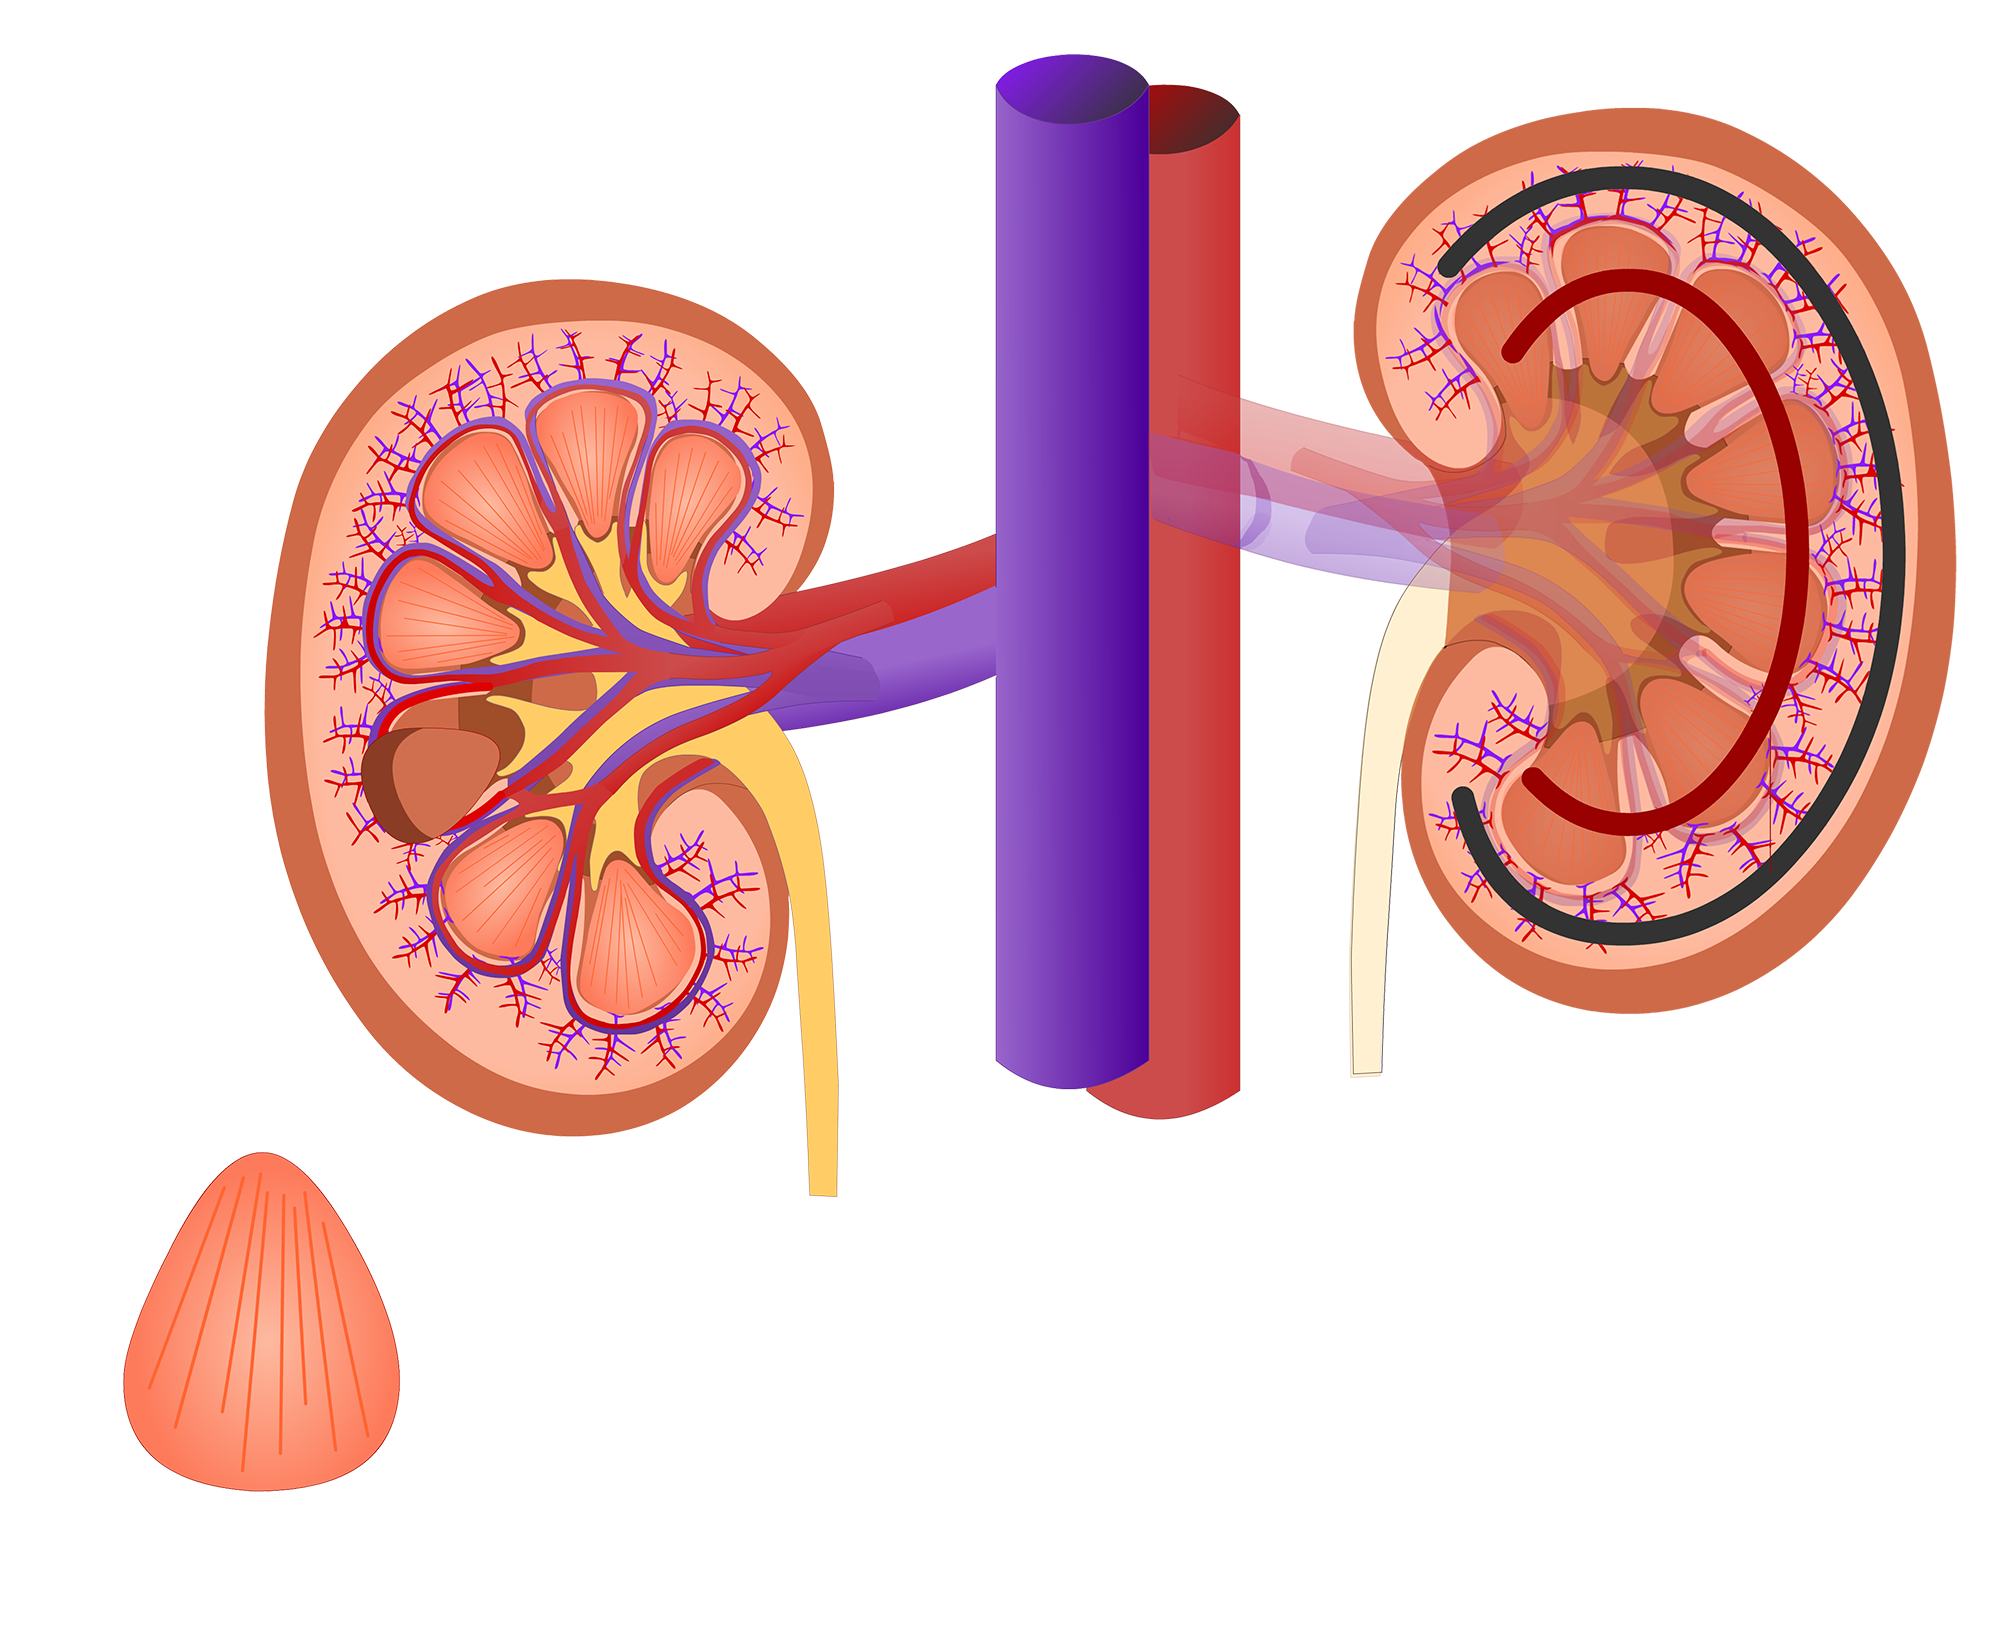 kidney clipart kidney diagram